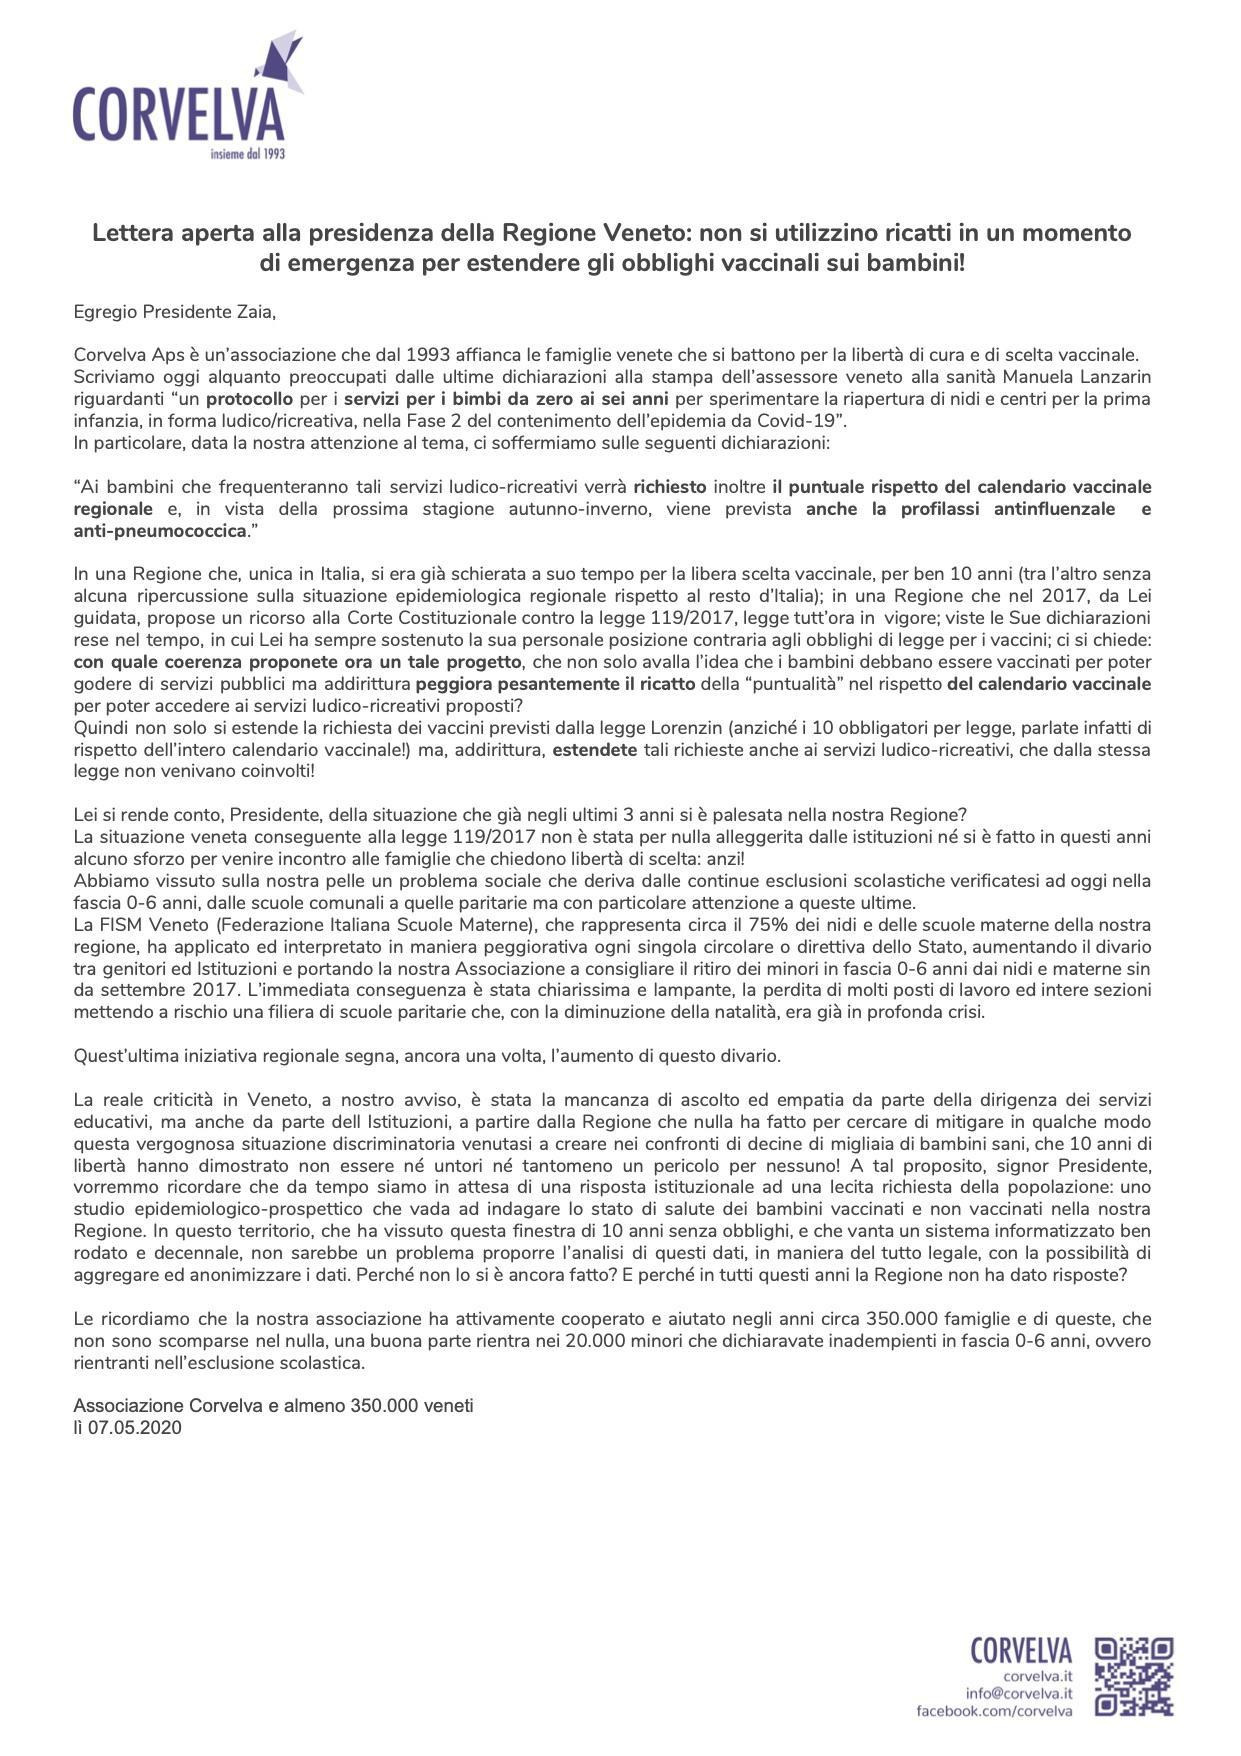 Open letter to the presidency of the Veneto Region